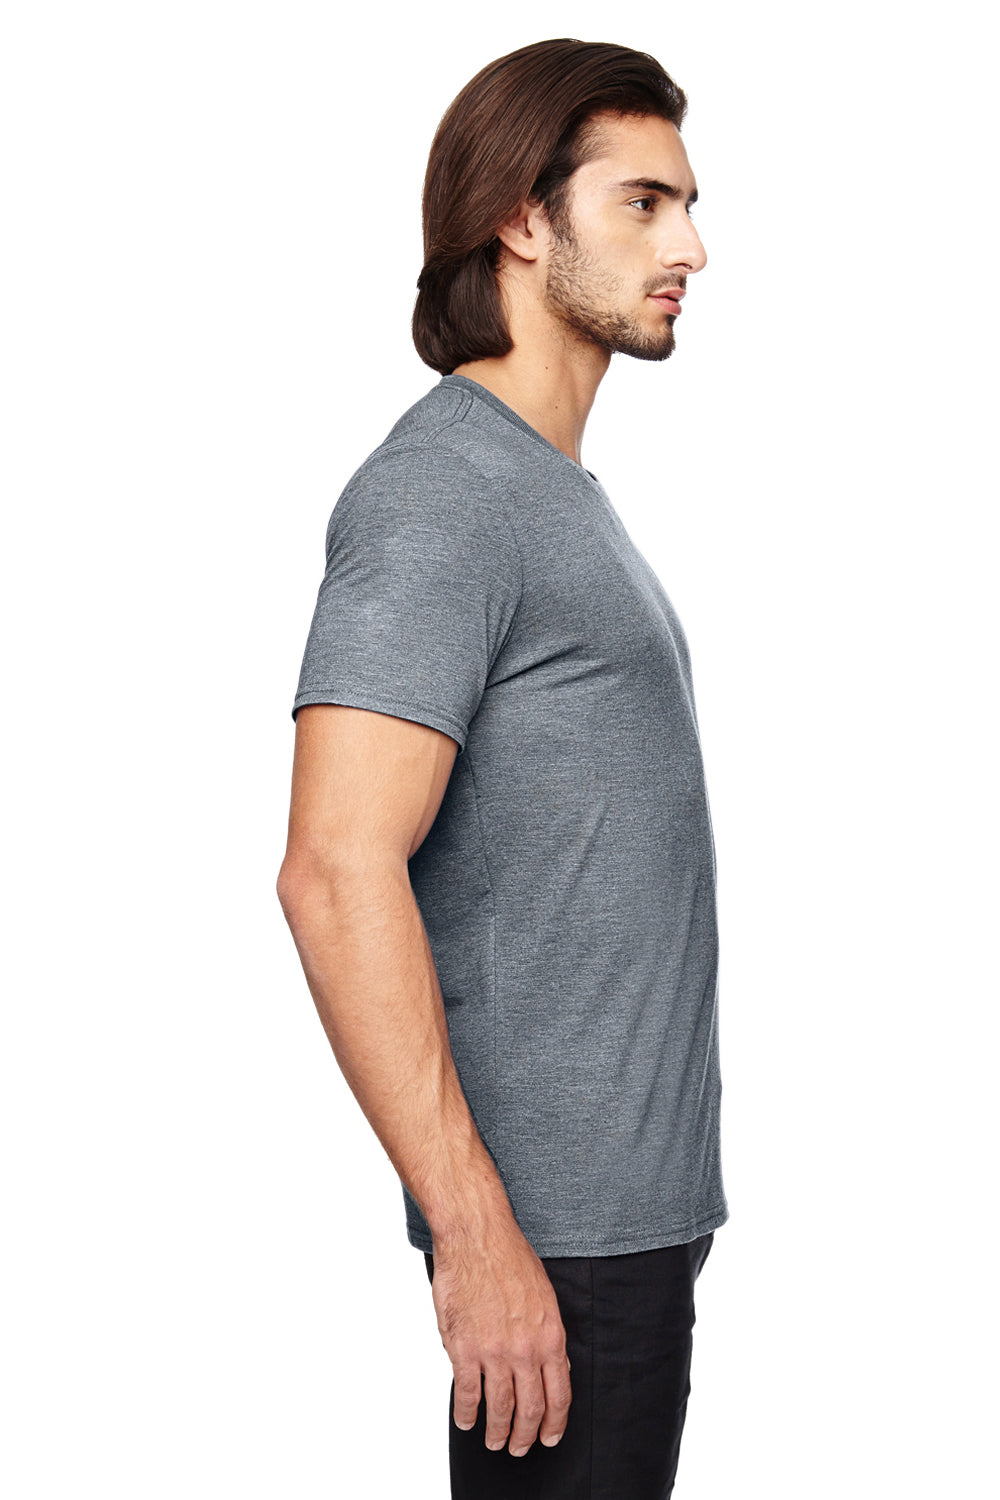 Anvil 6750 Mens Short Sleeve Crewneck T-Shirt Heather Graphite Grey Side